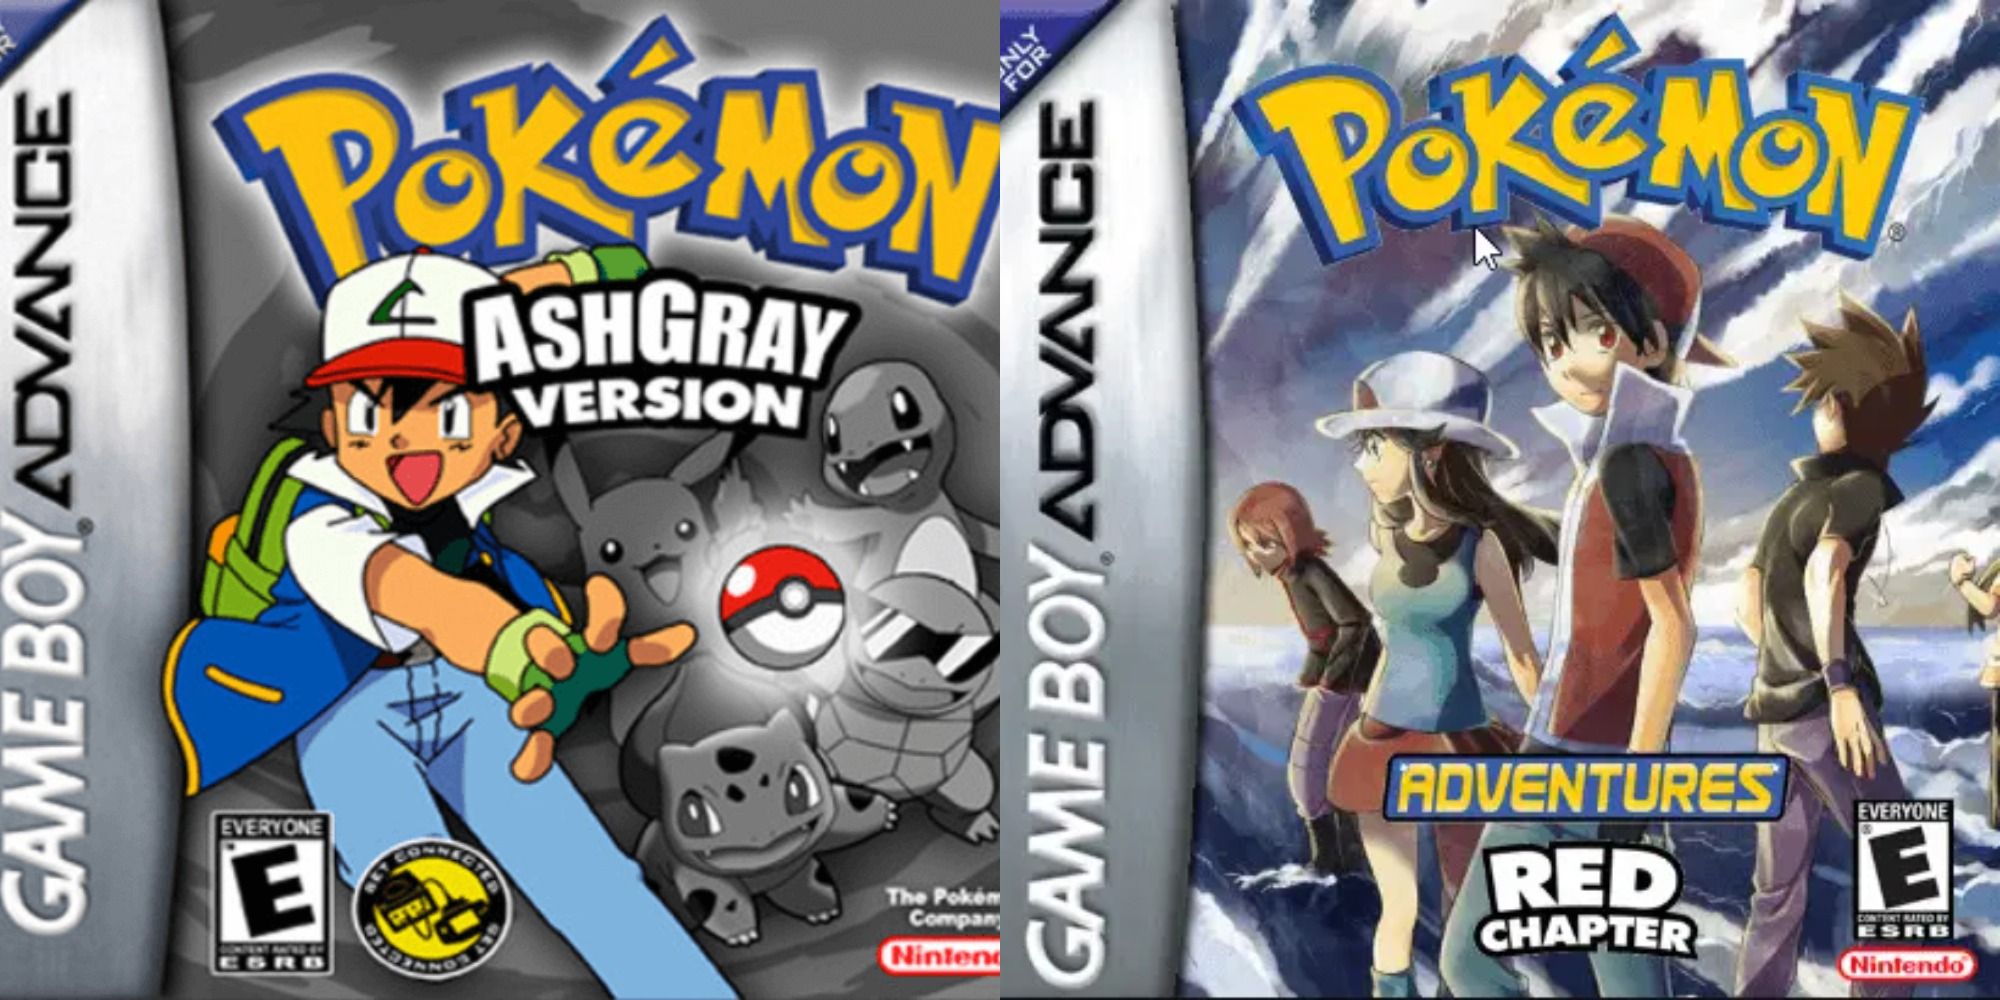 pokemon ash gray 2 gba rom download